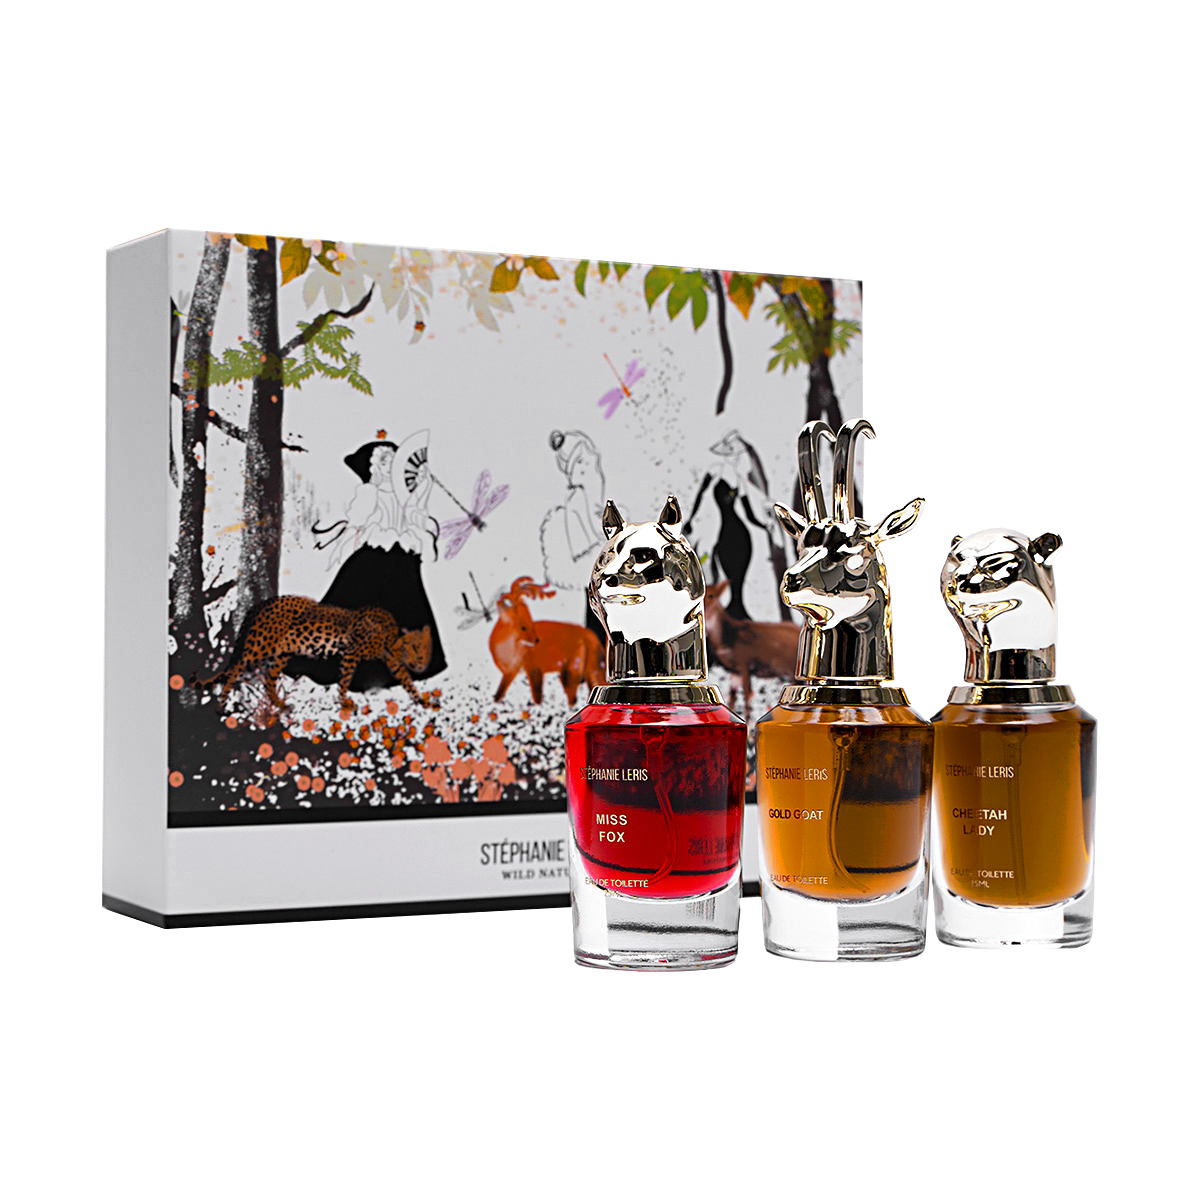 stephanie leris bright touch набор женского парфюма 4 в 1 4 шт по 25 мл Д_Набор парфюмов STEPHANIE LERIS wild nature 3 в 1 (по 25 мл)